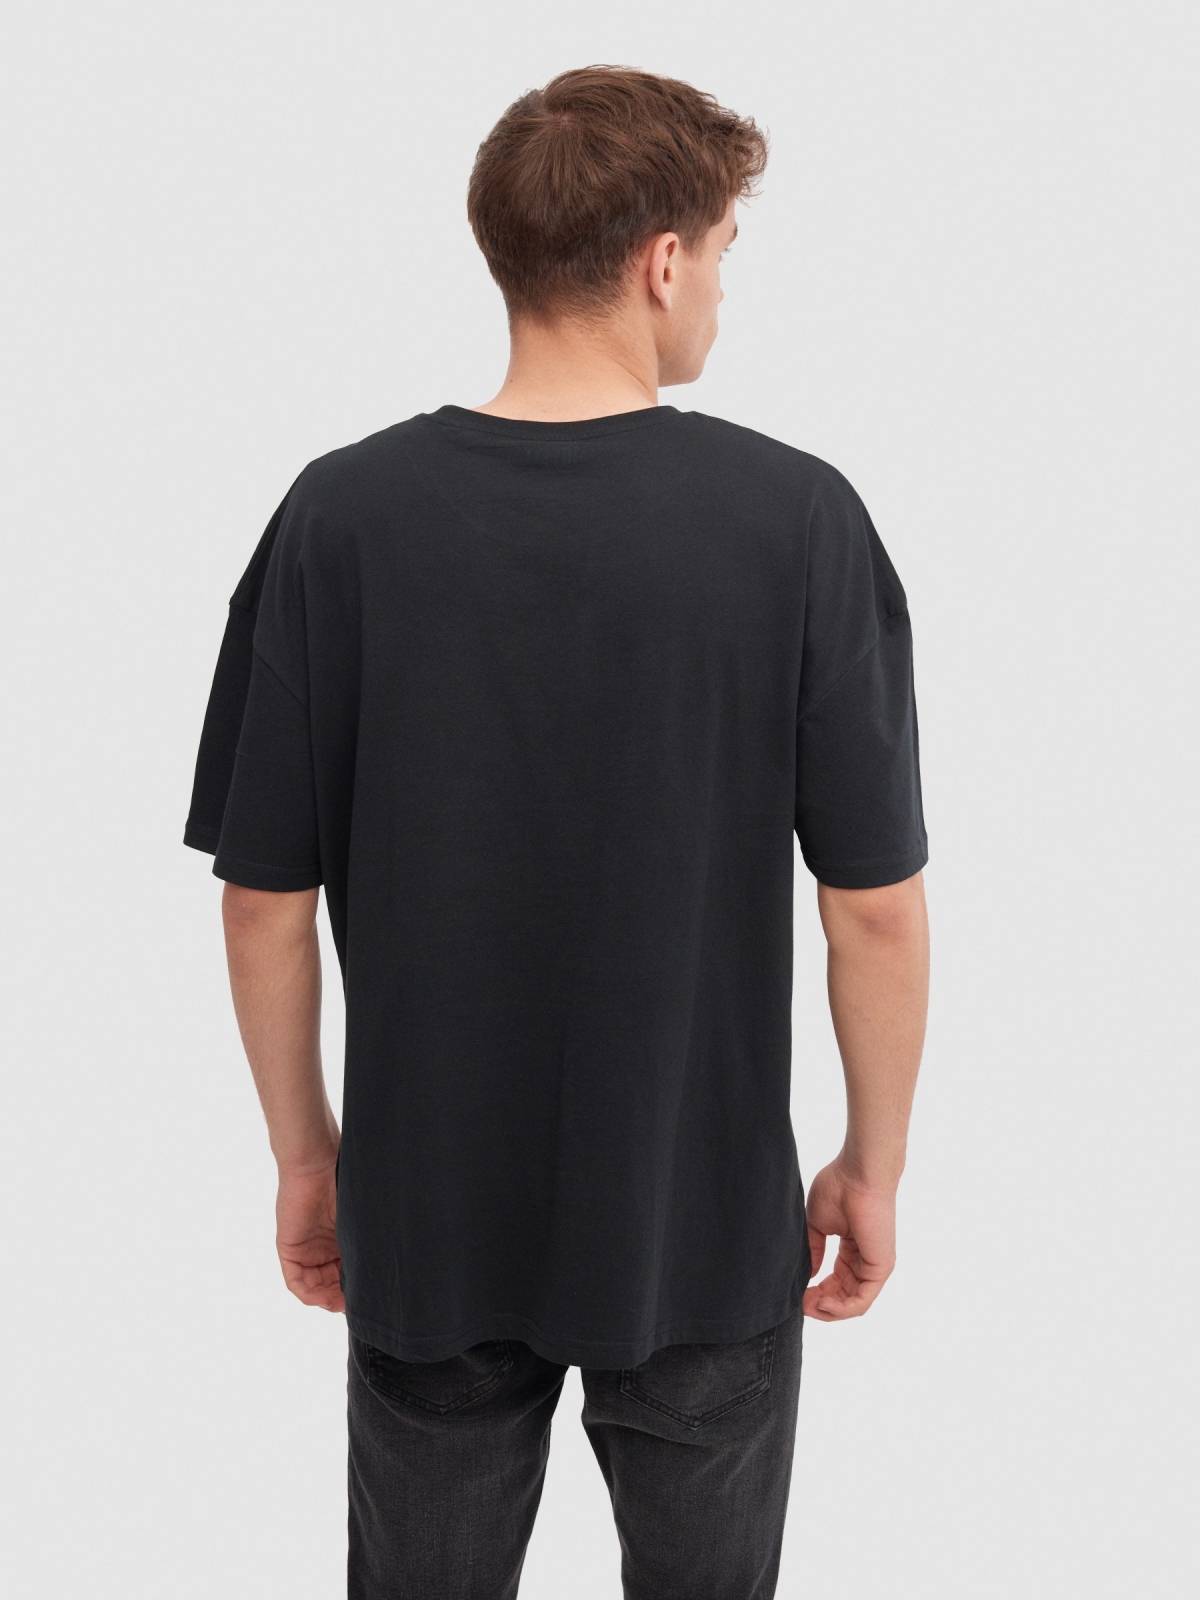 T-shirt Nirvana preto vista meia traseira